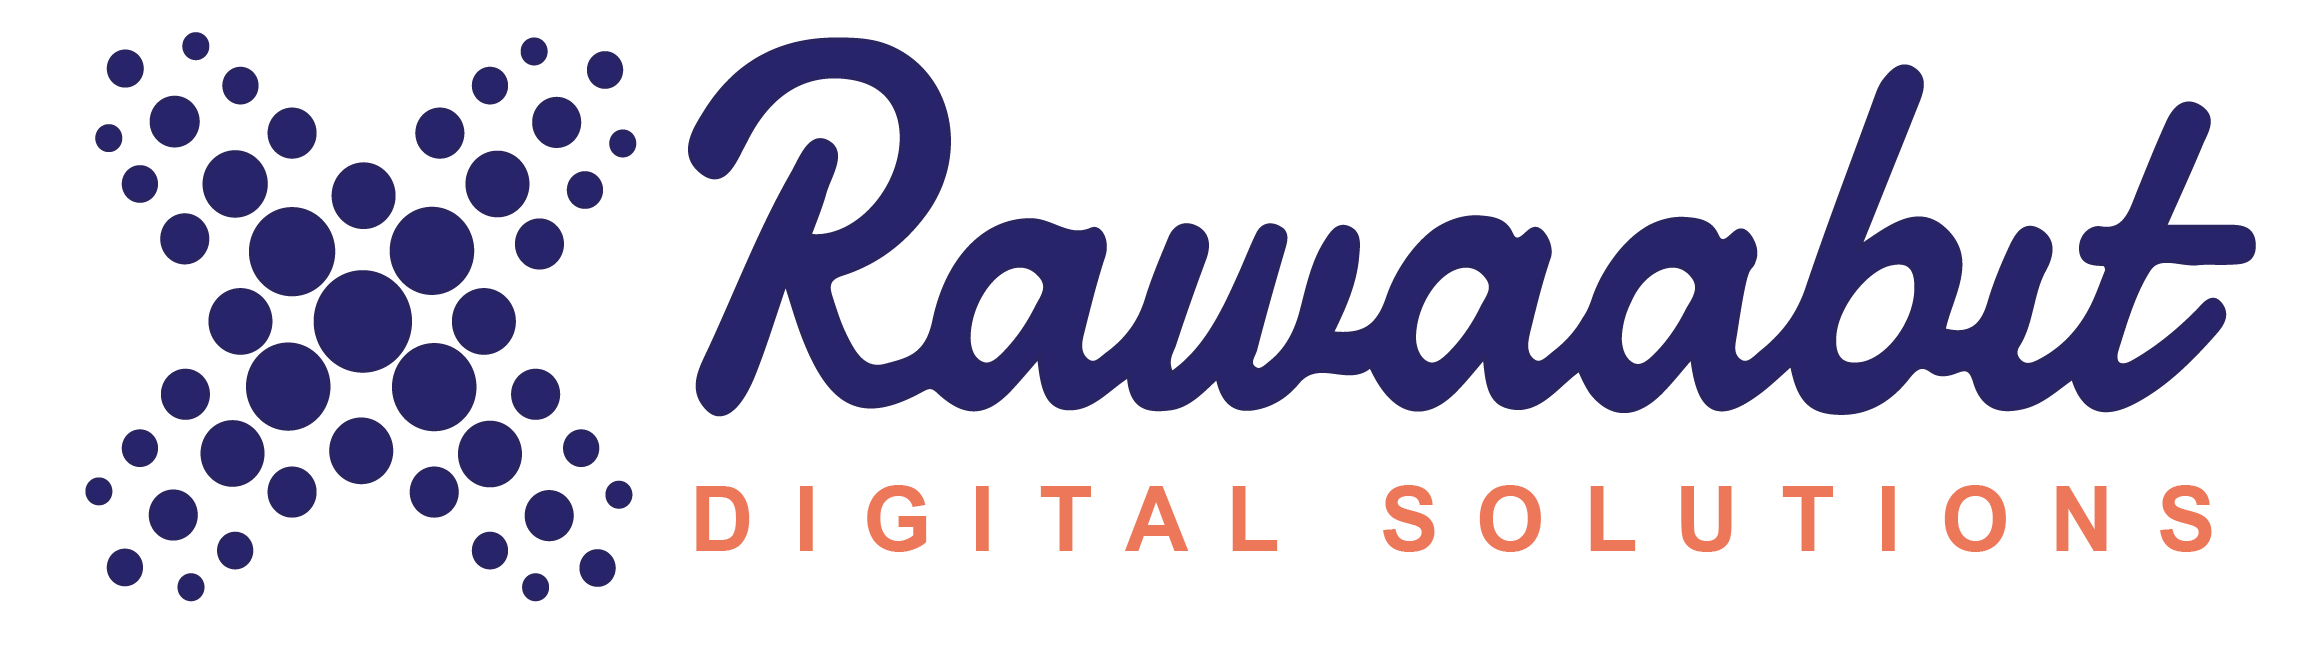 rawaabit logo